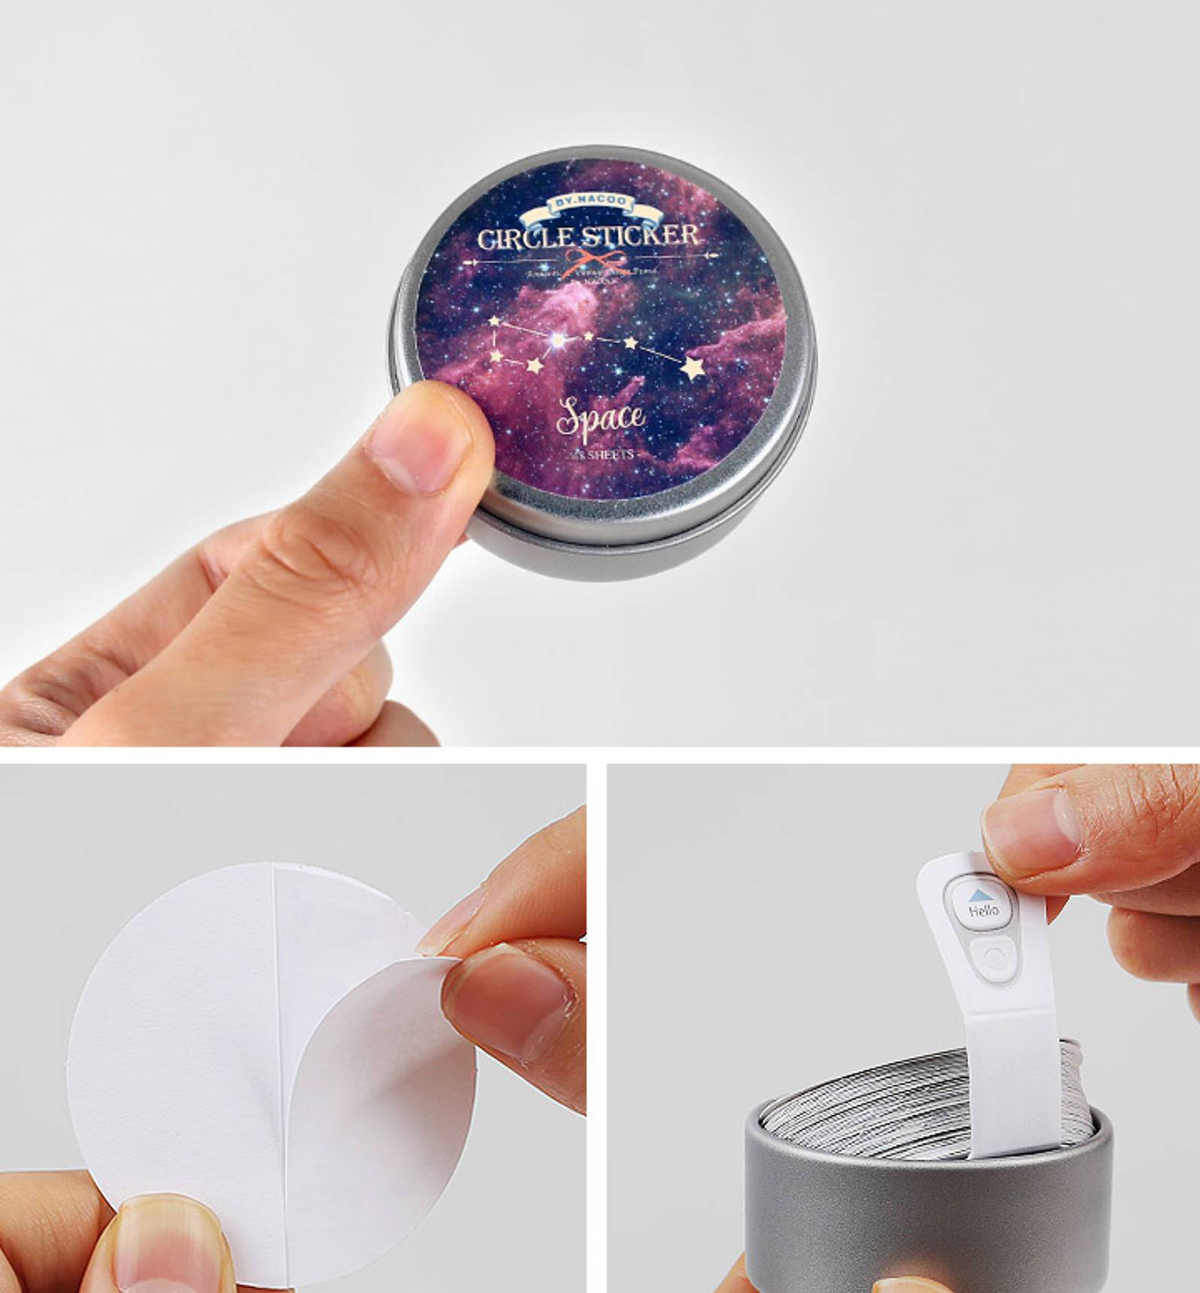 Circle Sticker [Space]